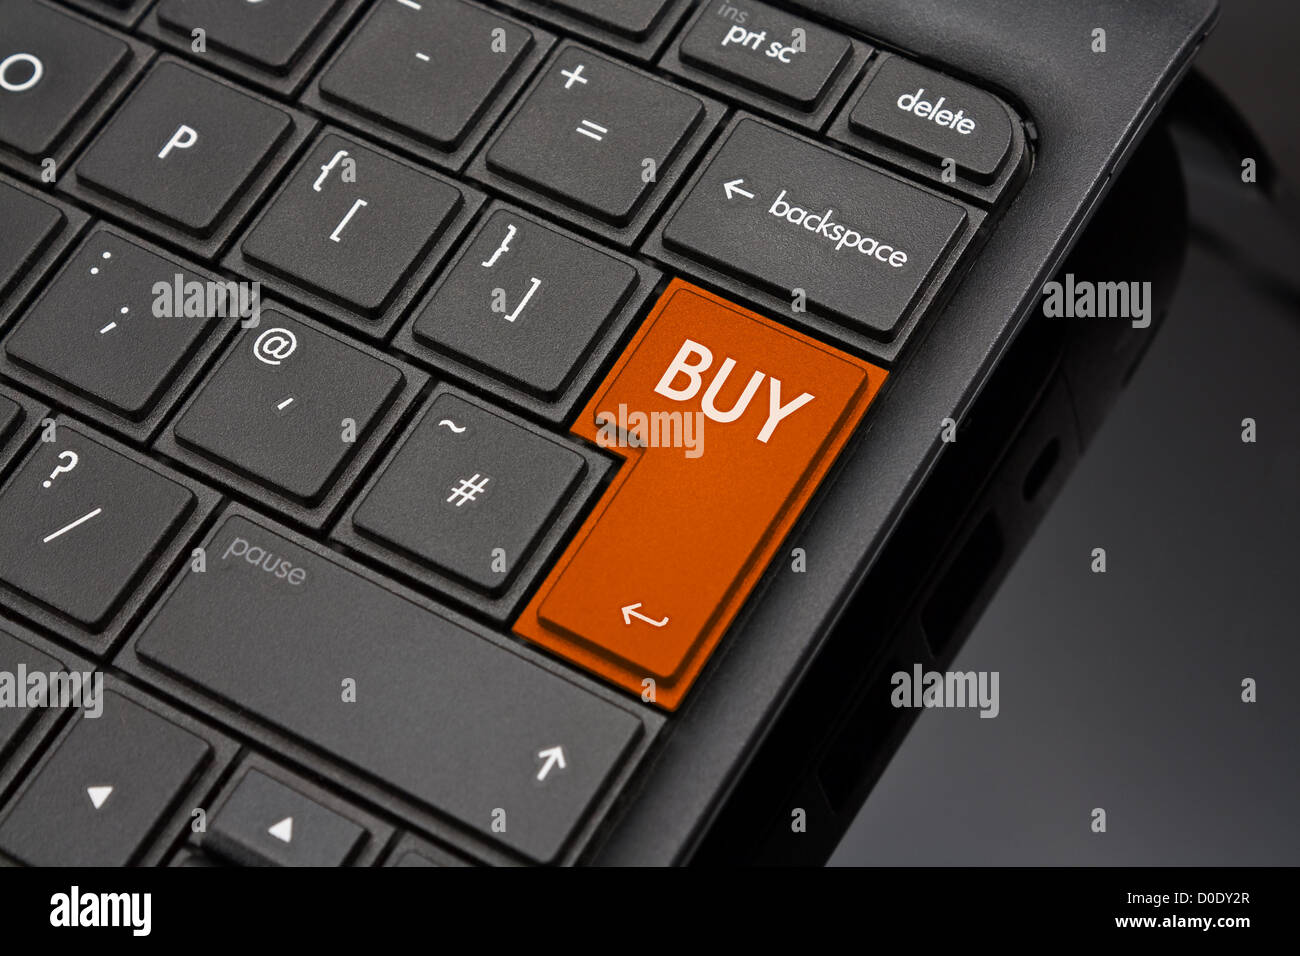 Enter Key modified to Buy to symbolise online shopping Stock Photo